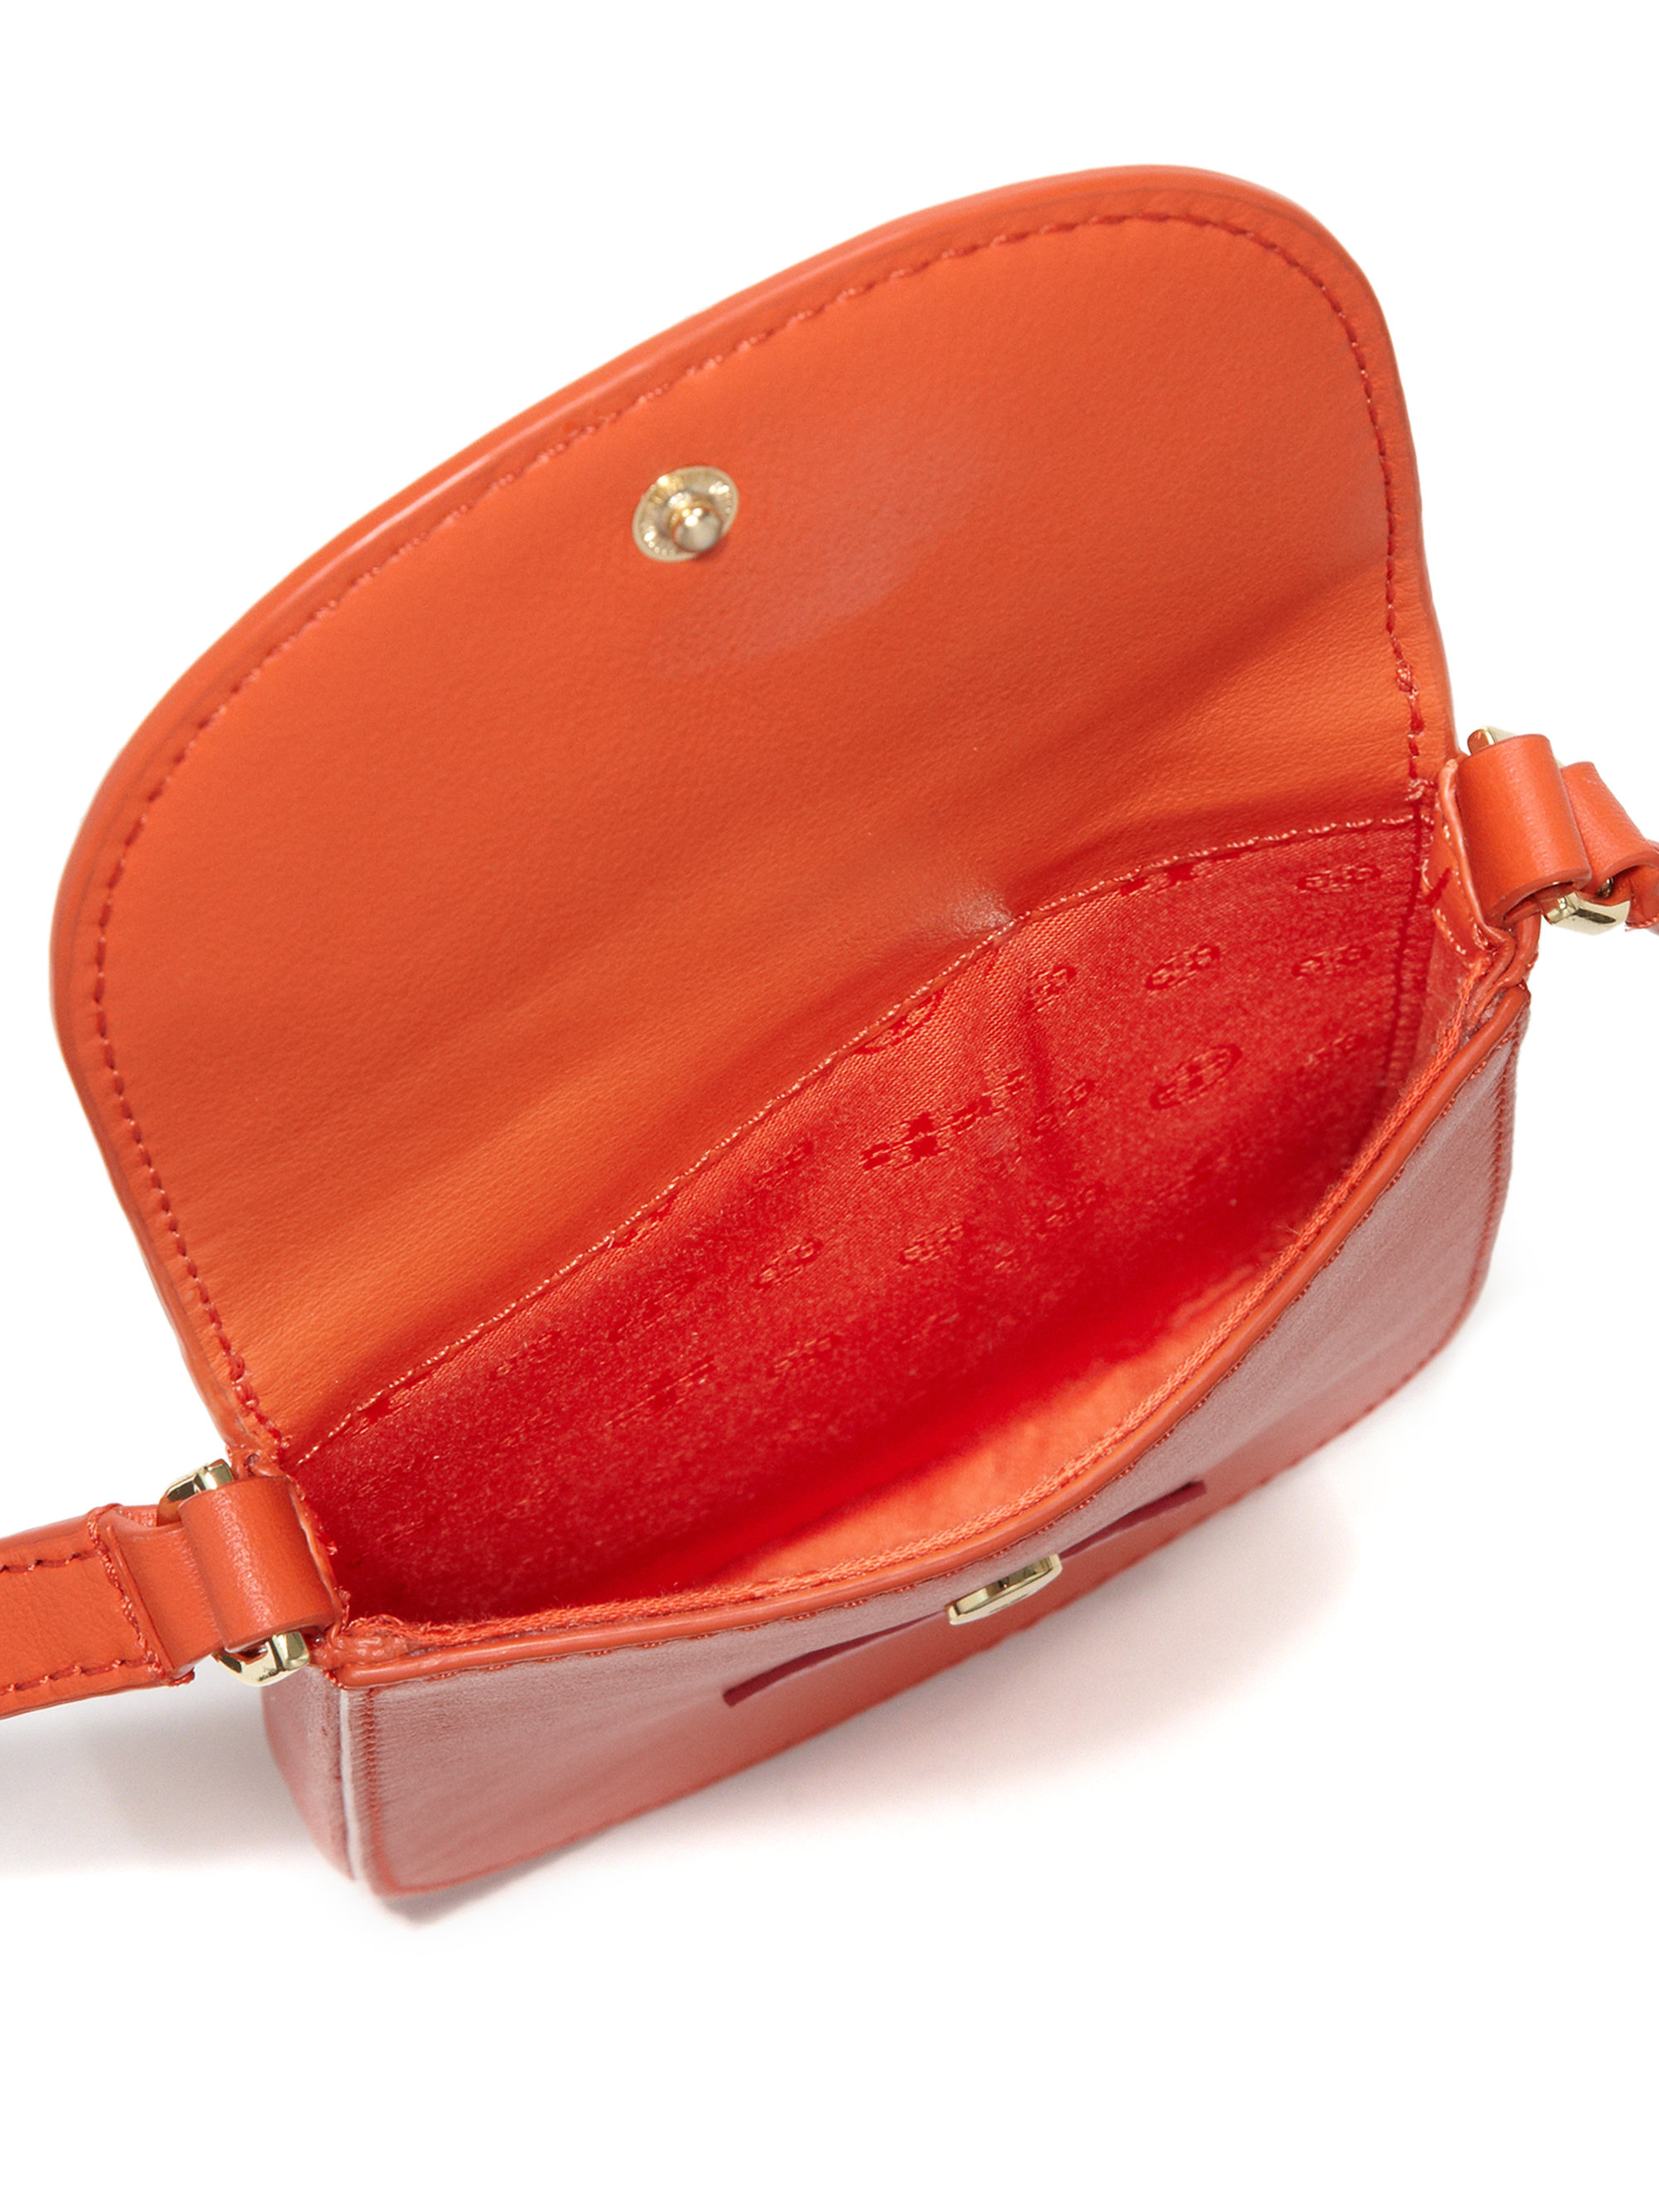 Tory burch Novelty Mini Phone Leather Crossbody Bag in Orange | Lyst